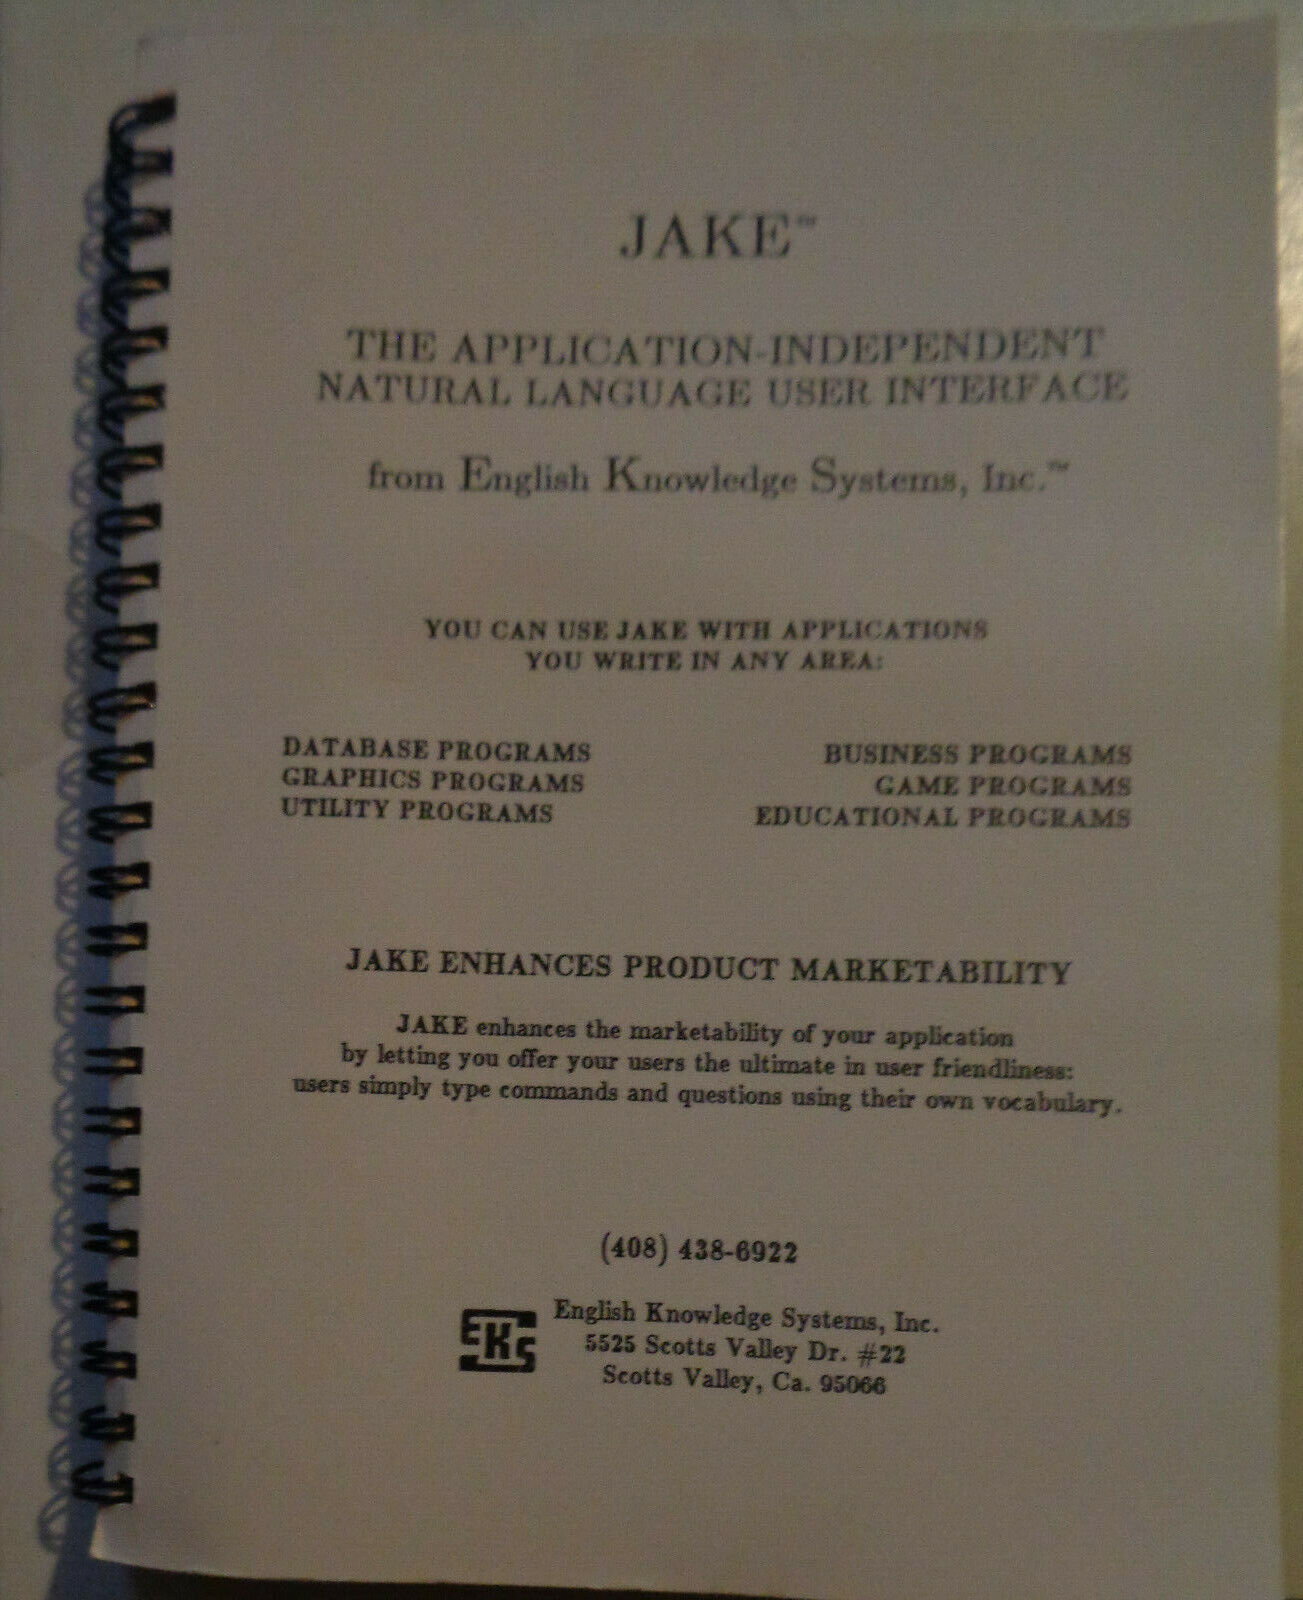 JAKE - The Application-independent Natural Language User Interface - 1989, IBM